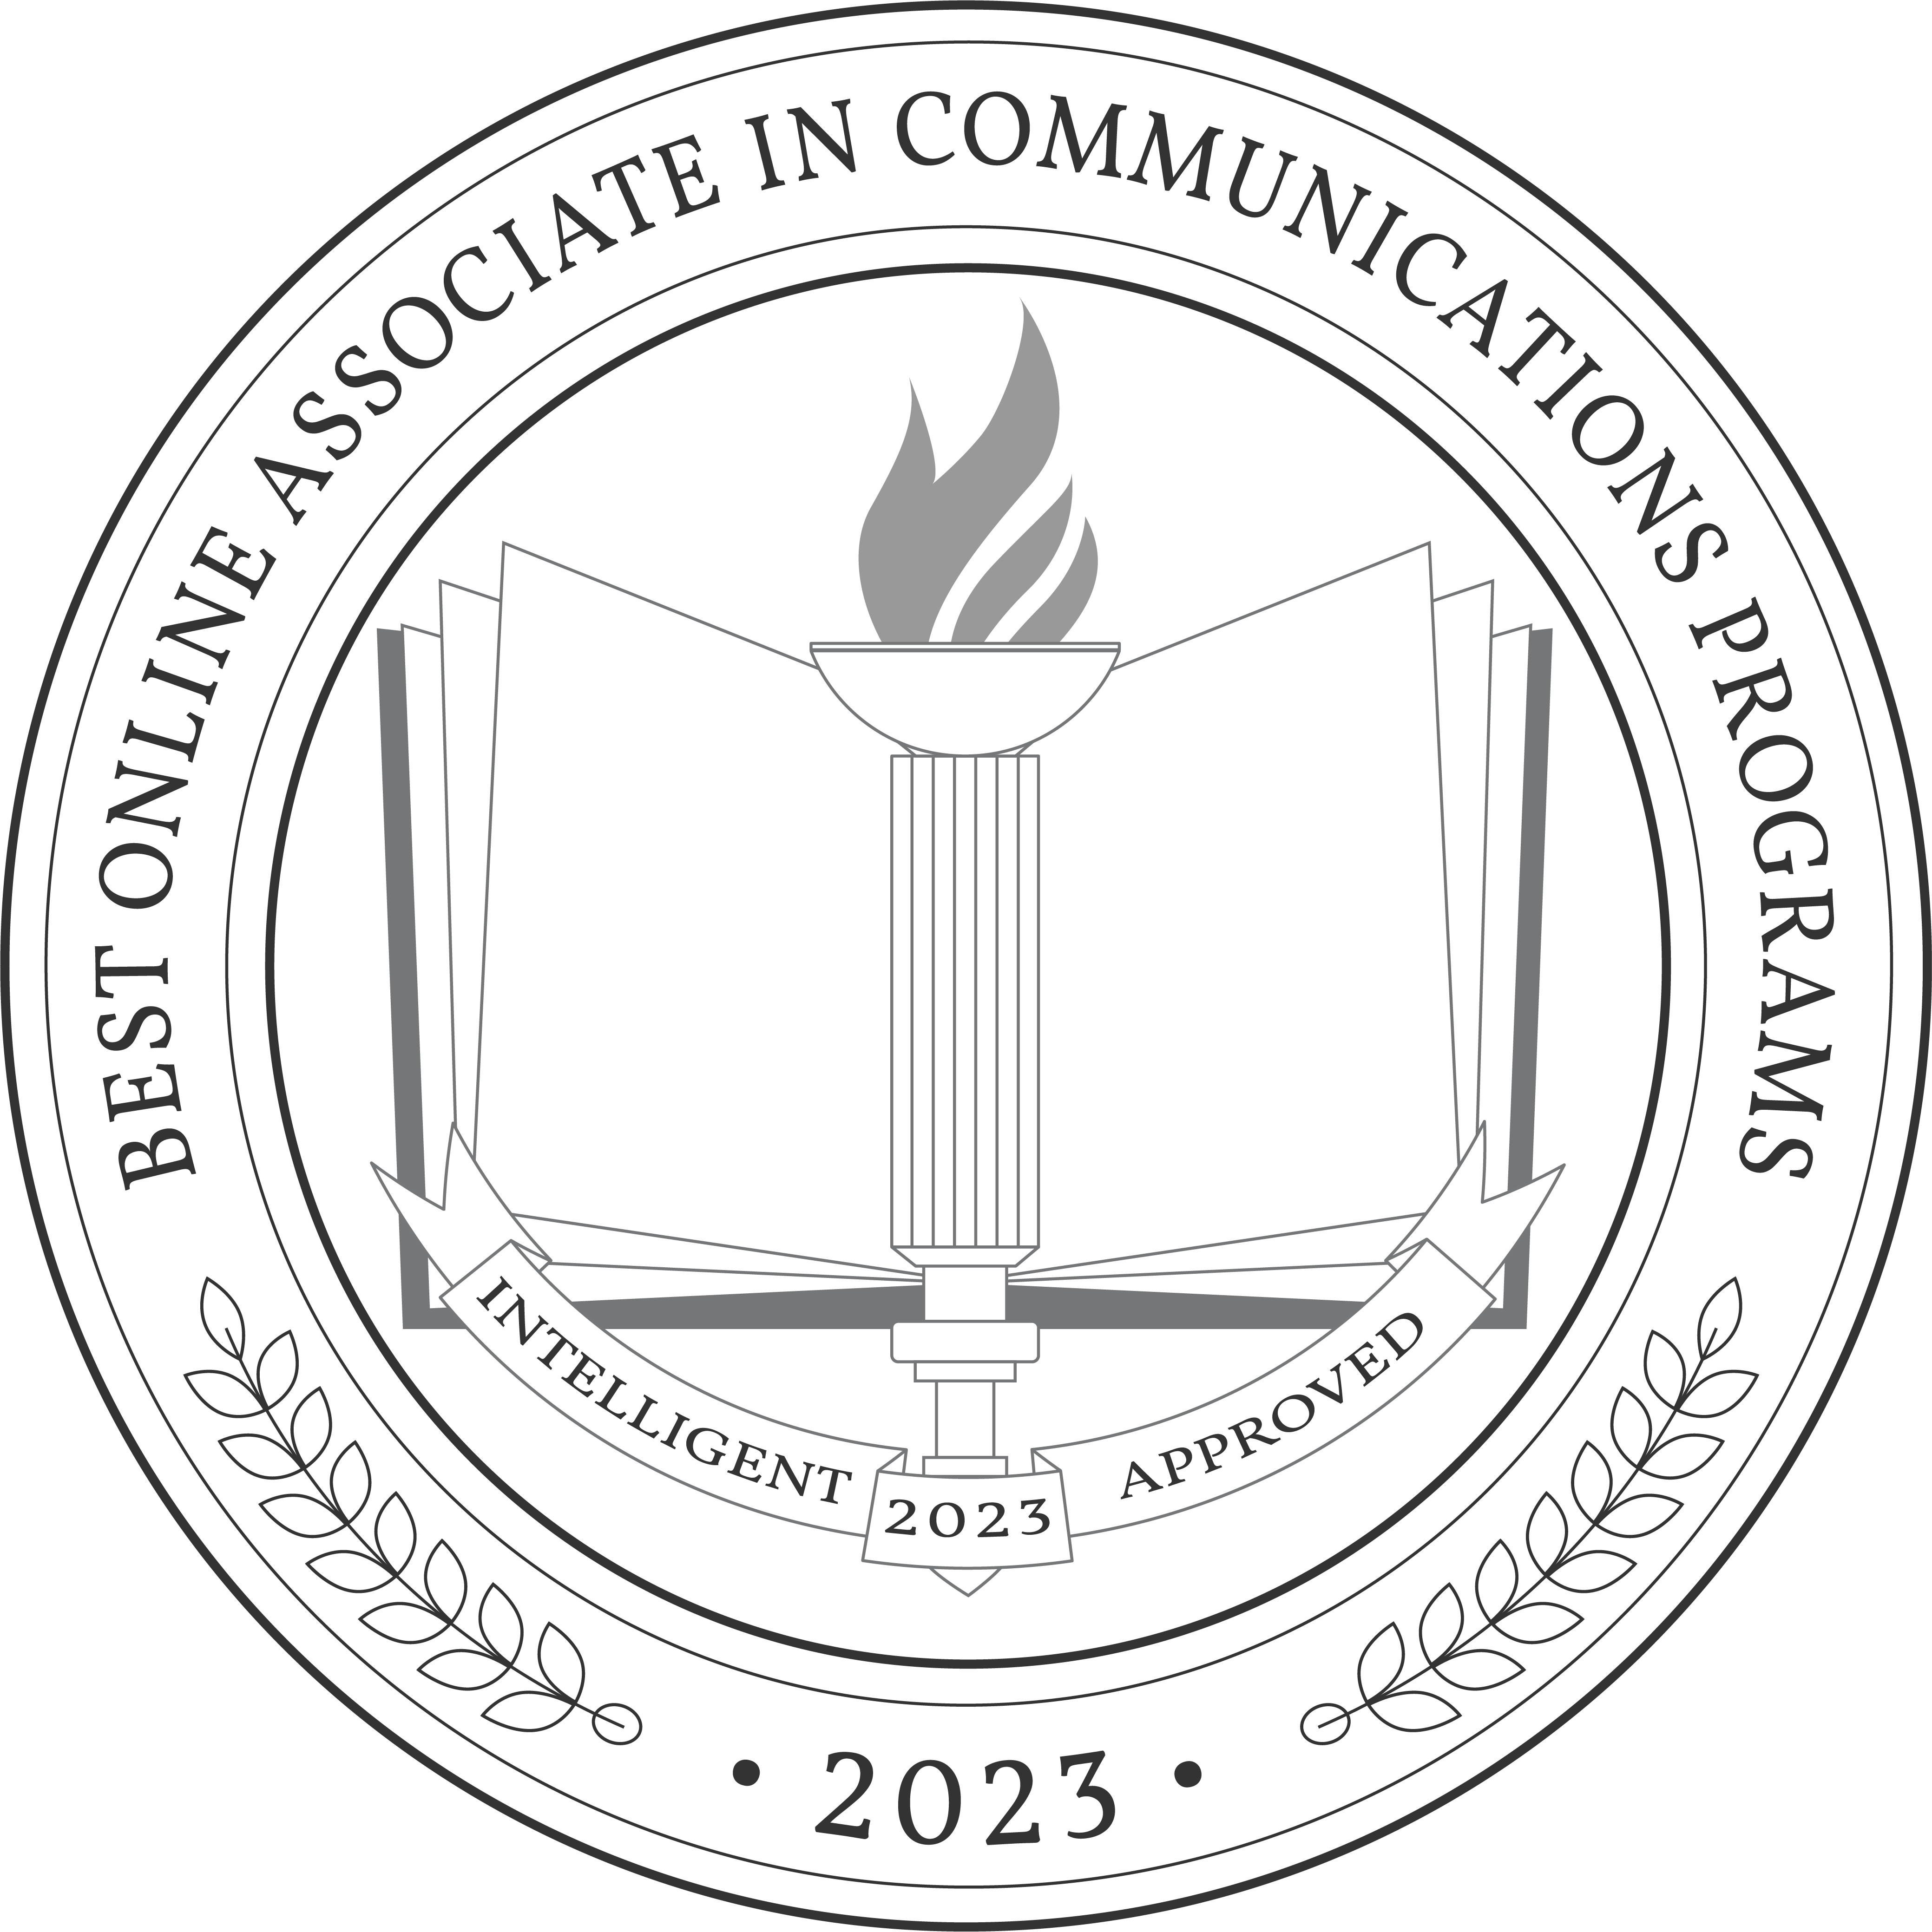 Best Online Associate in Communications Programs badge